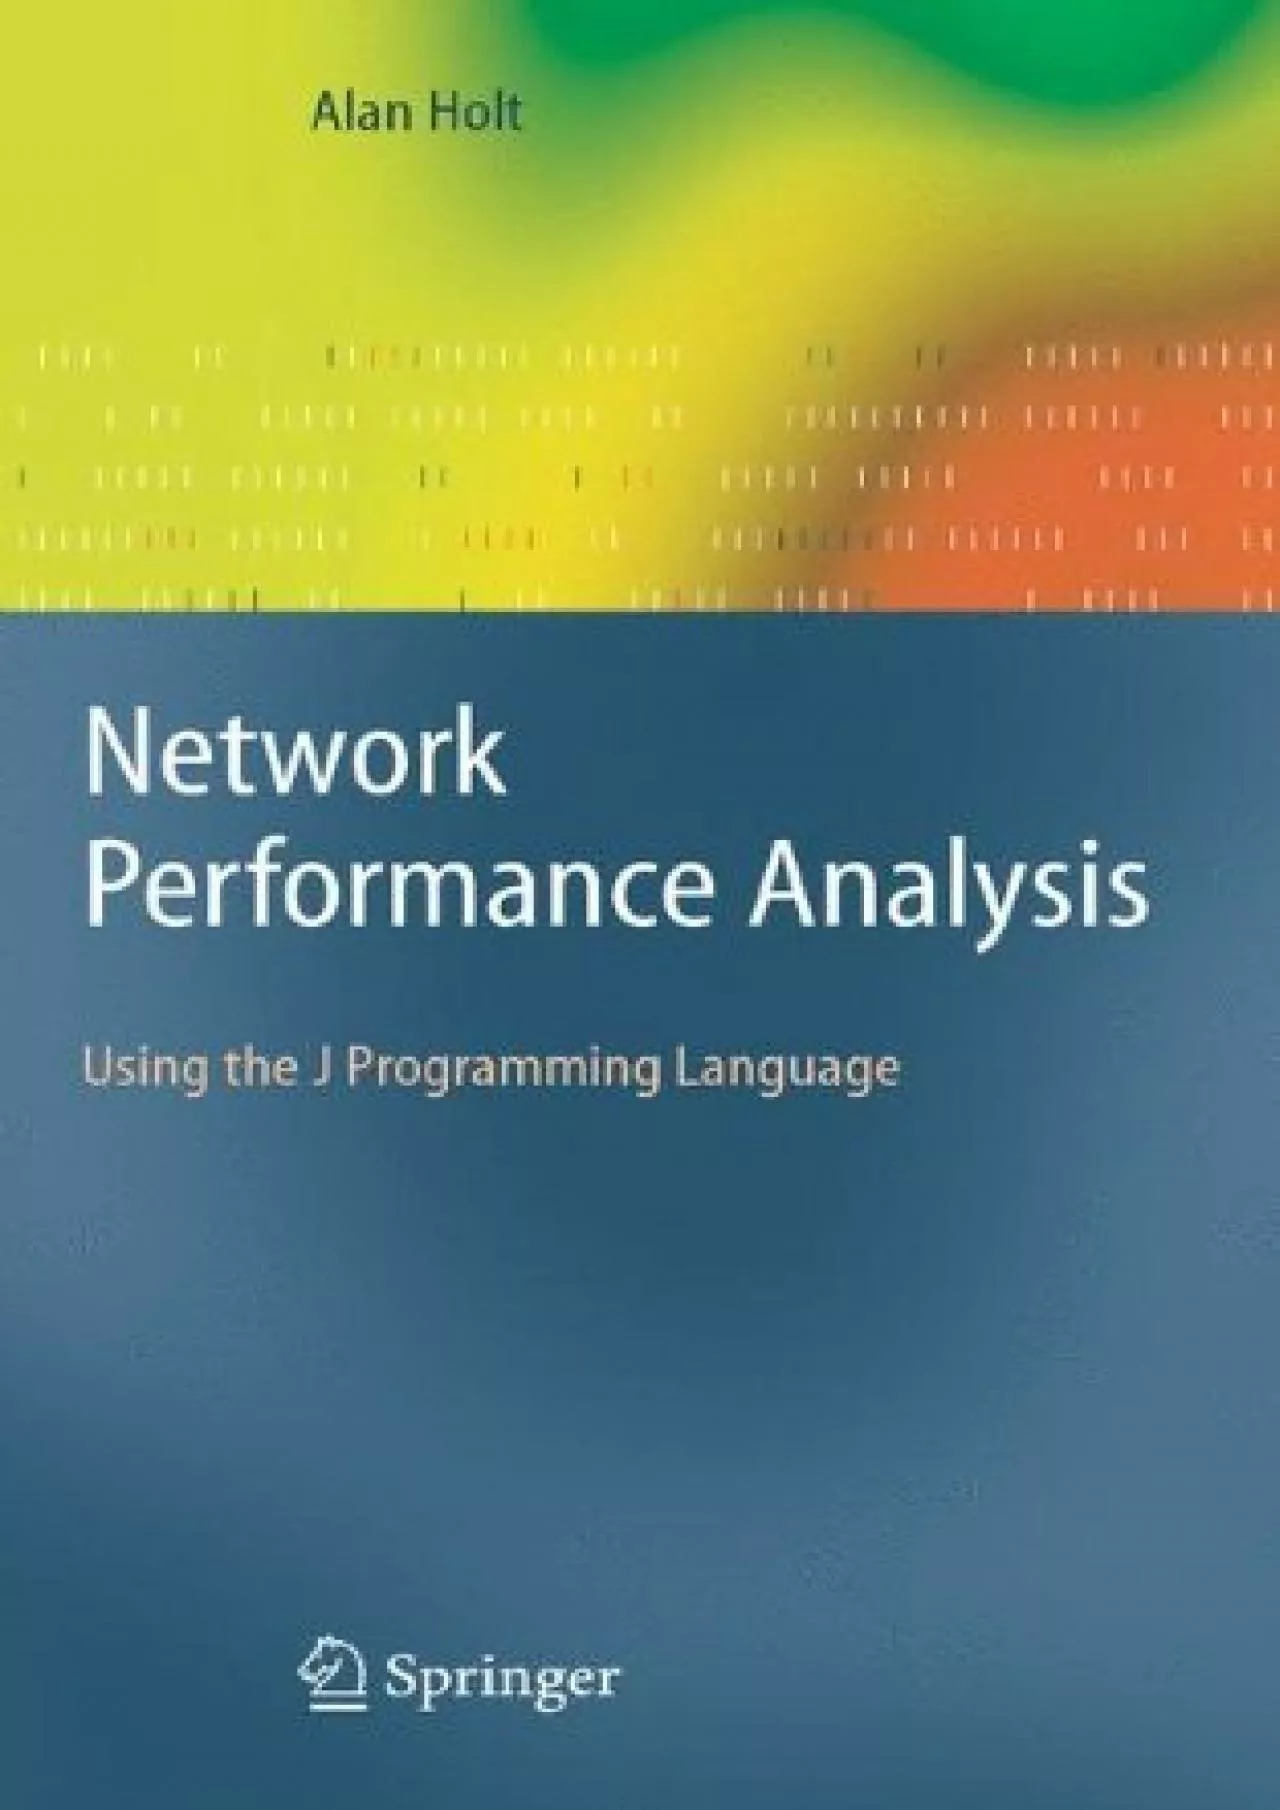 [READING BOOK]-Network Performance Analysis: Using the J Programming Language